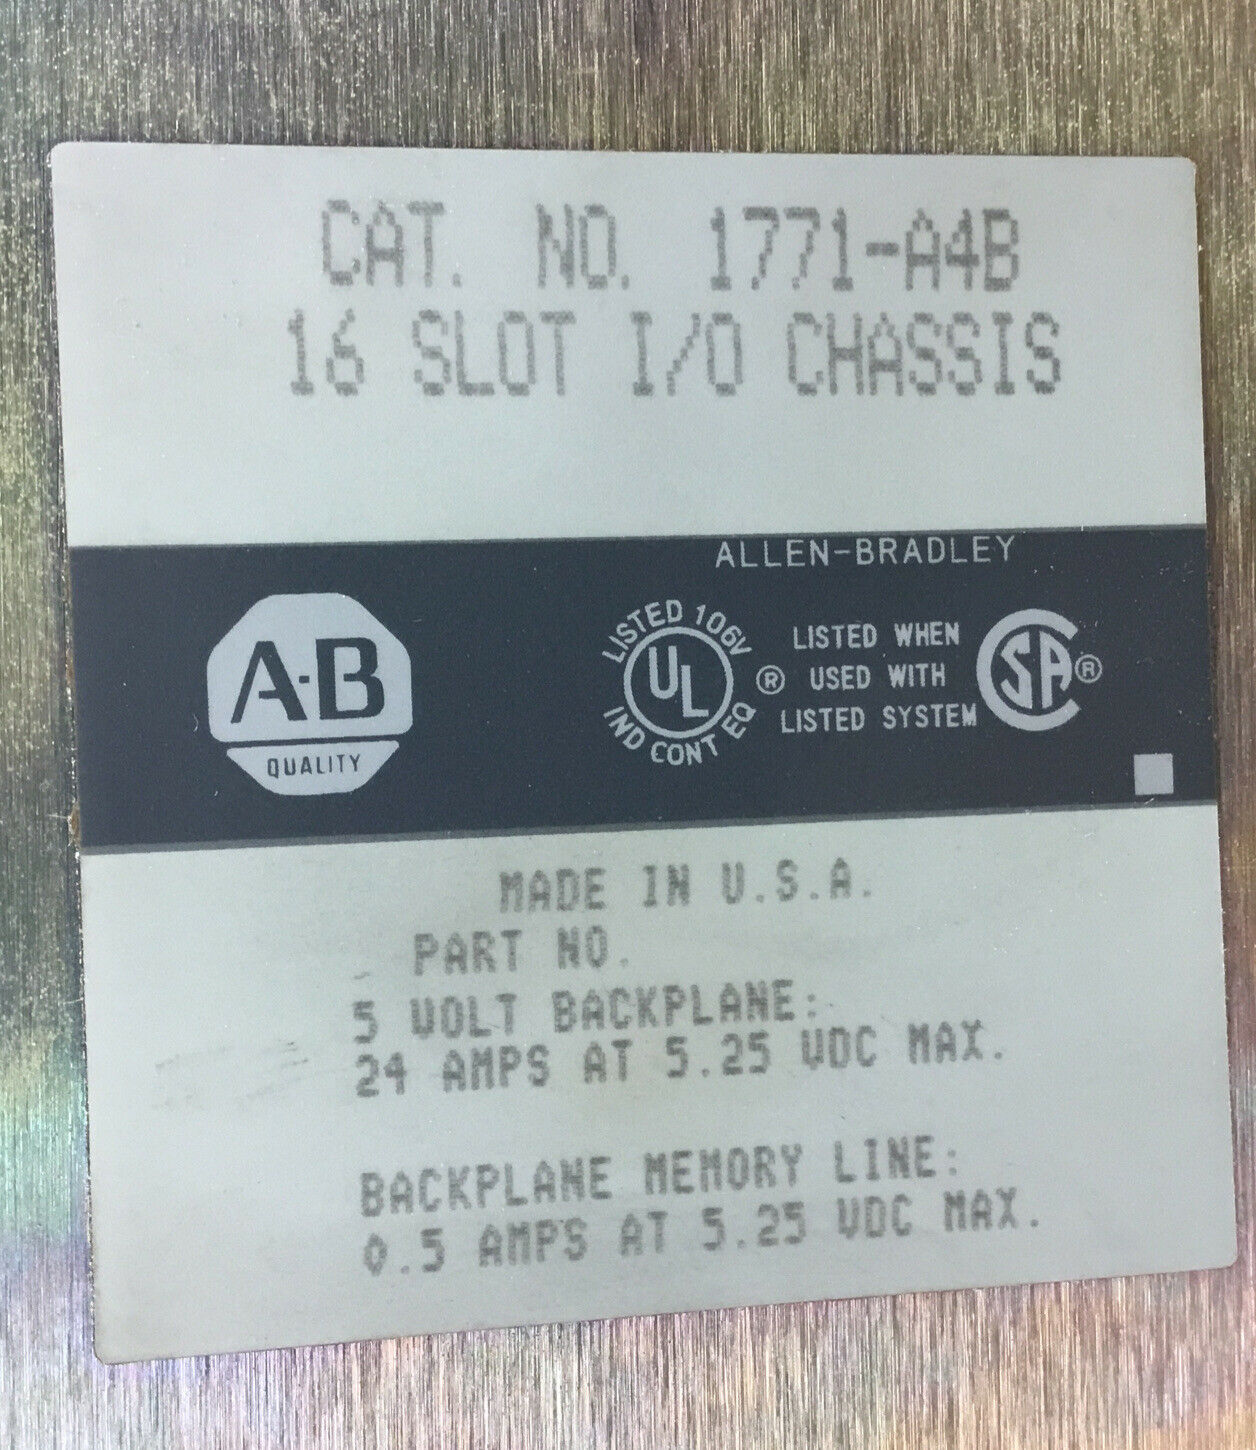 Allen Bradley 1771-A4B 16 Slot I/O Chassis      3H